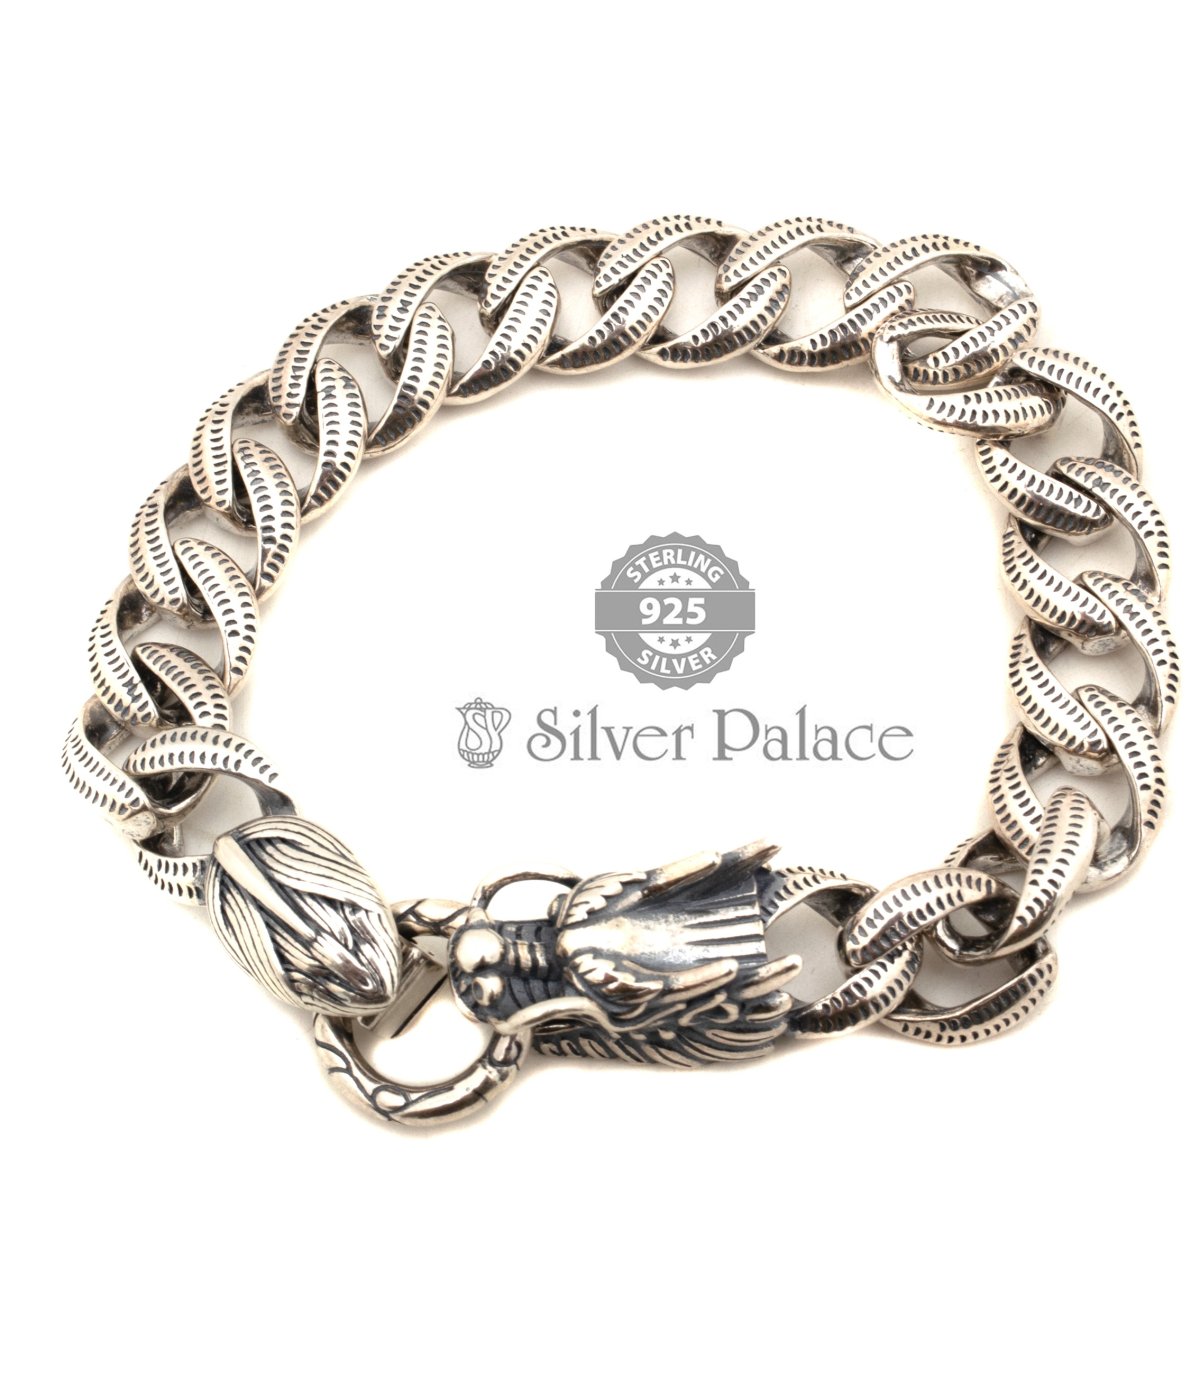  92.5 Silver Oxidized Plated Dragon Head Fashion Bracelet Men’s Jewelry